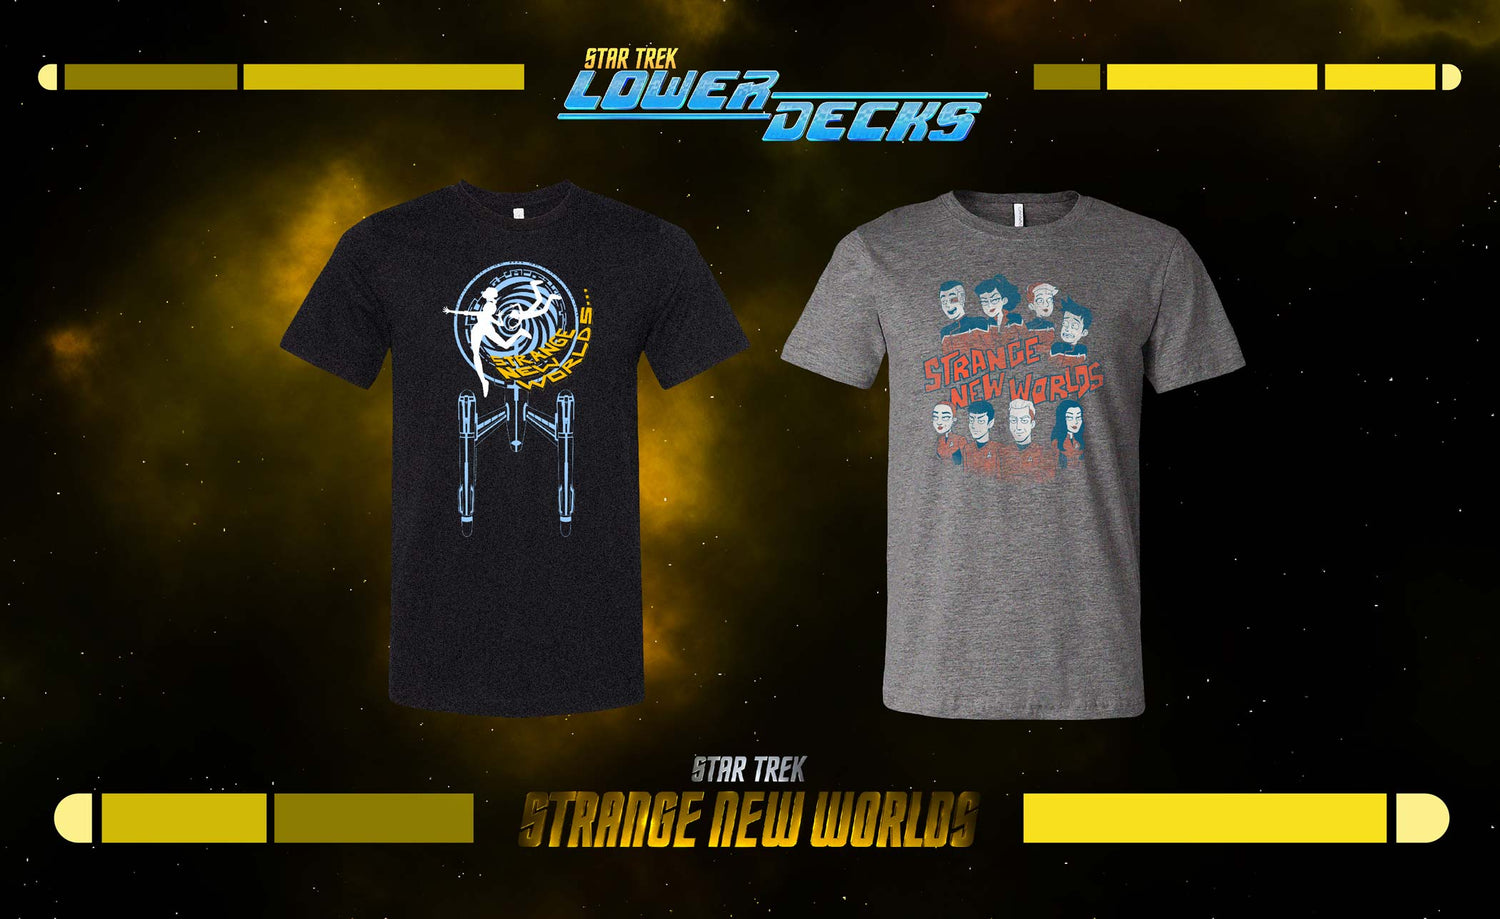 Star Trek Strange New Worlds + Star Trek Lower Decks T-shirts